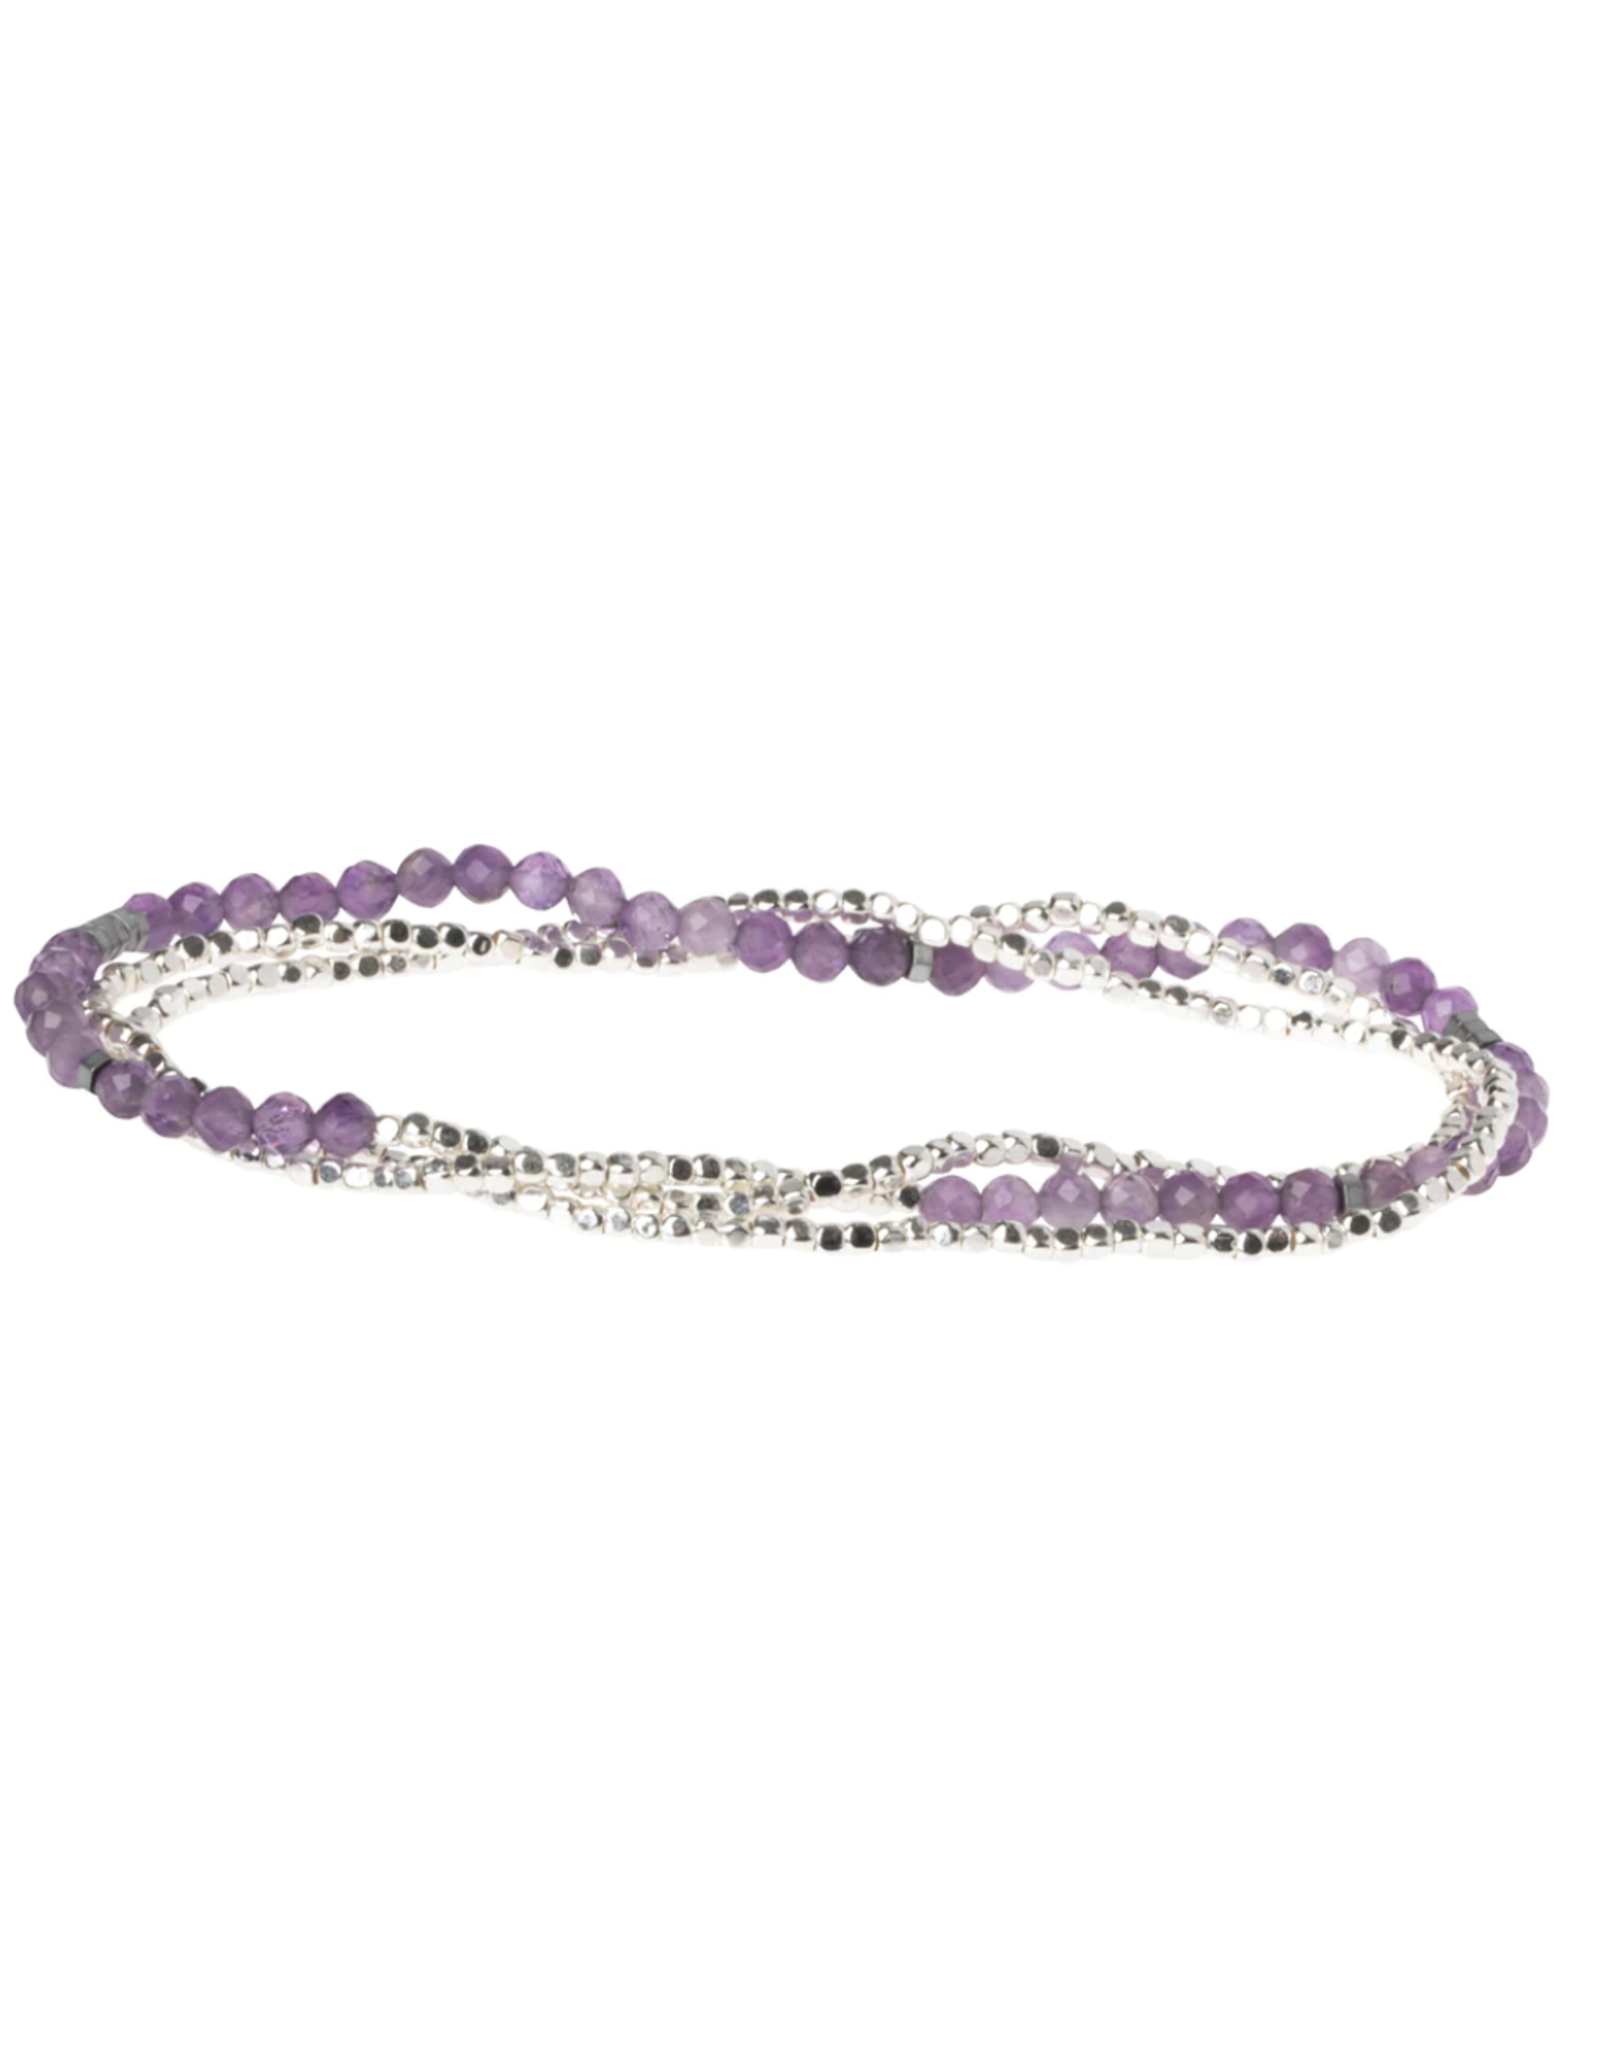 Scout Delicate Stone Bracelet/Necklace - Amethyst/Silver